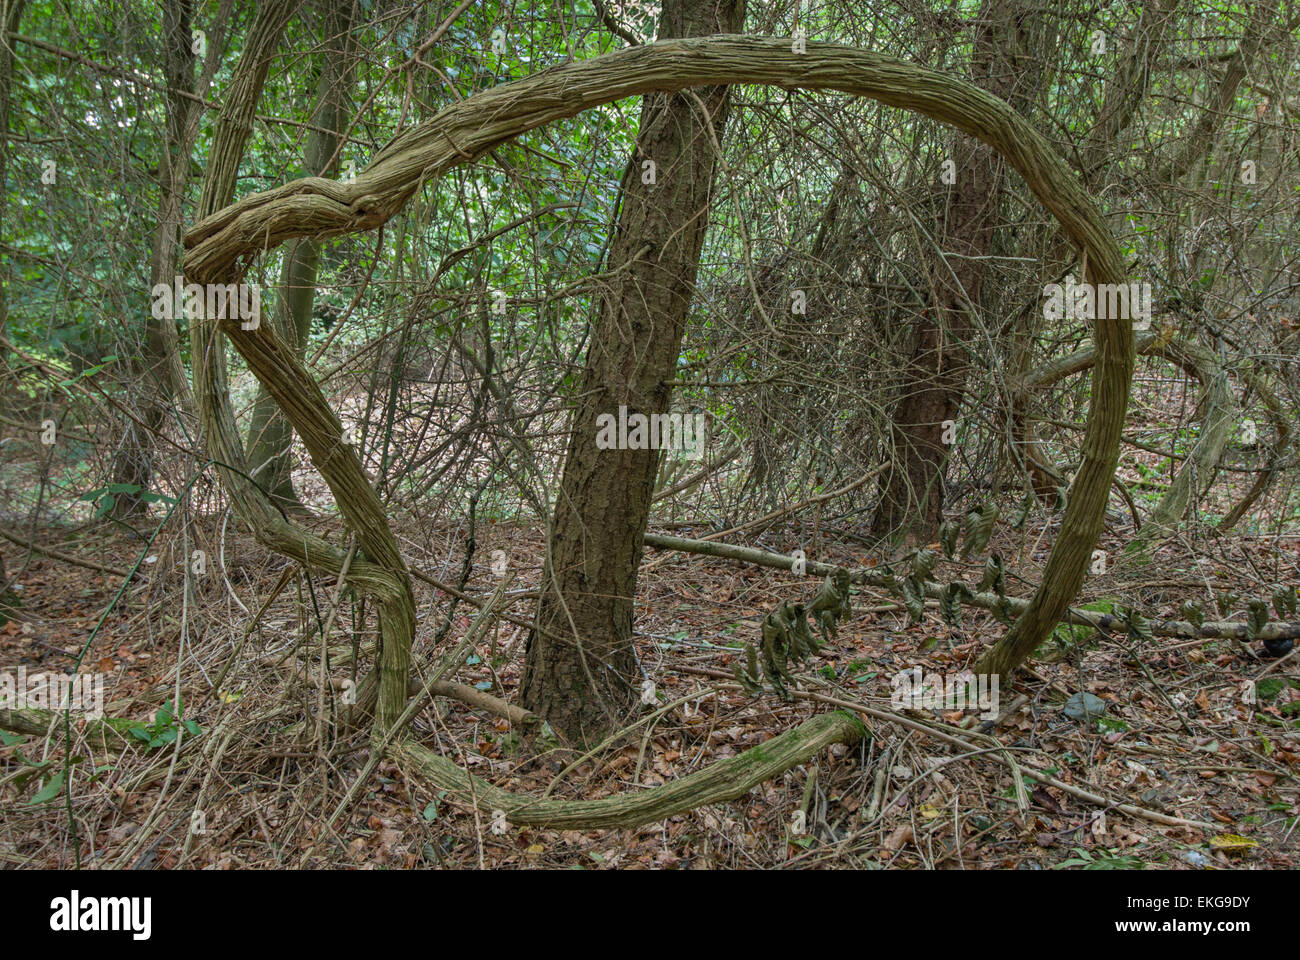 Creeping vine like plant in woodland Stock Photo